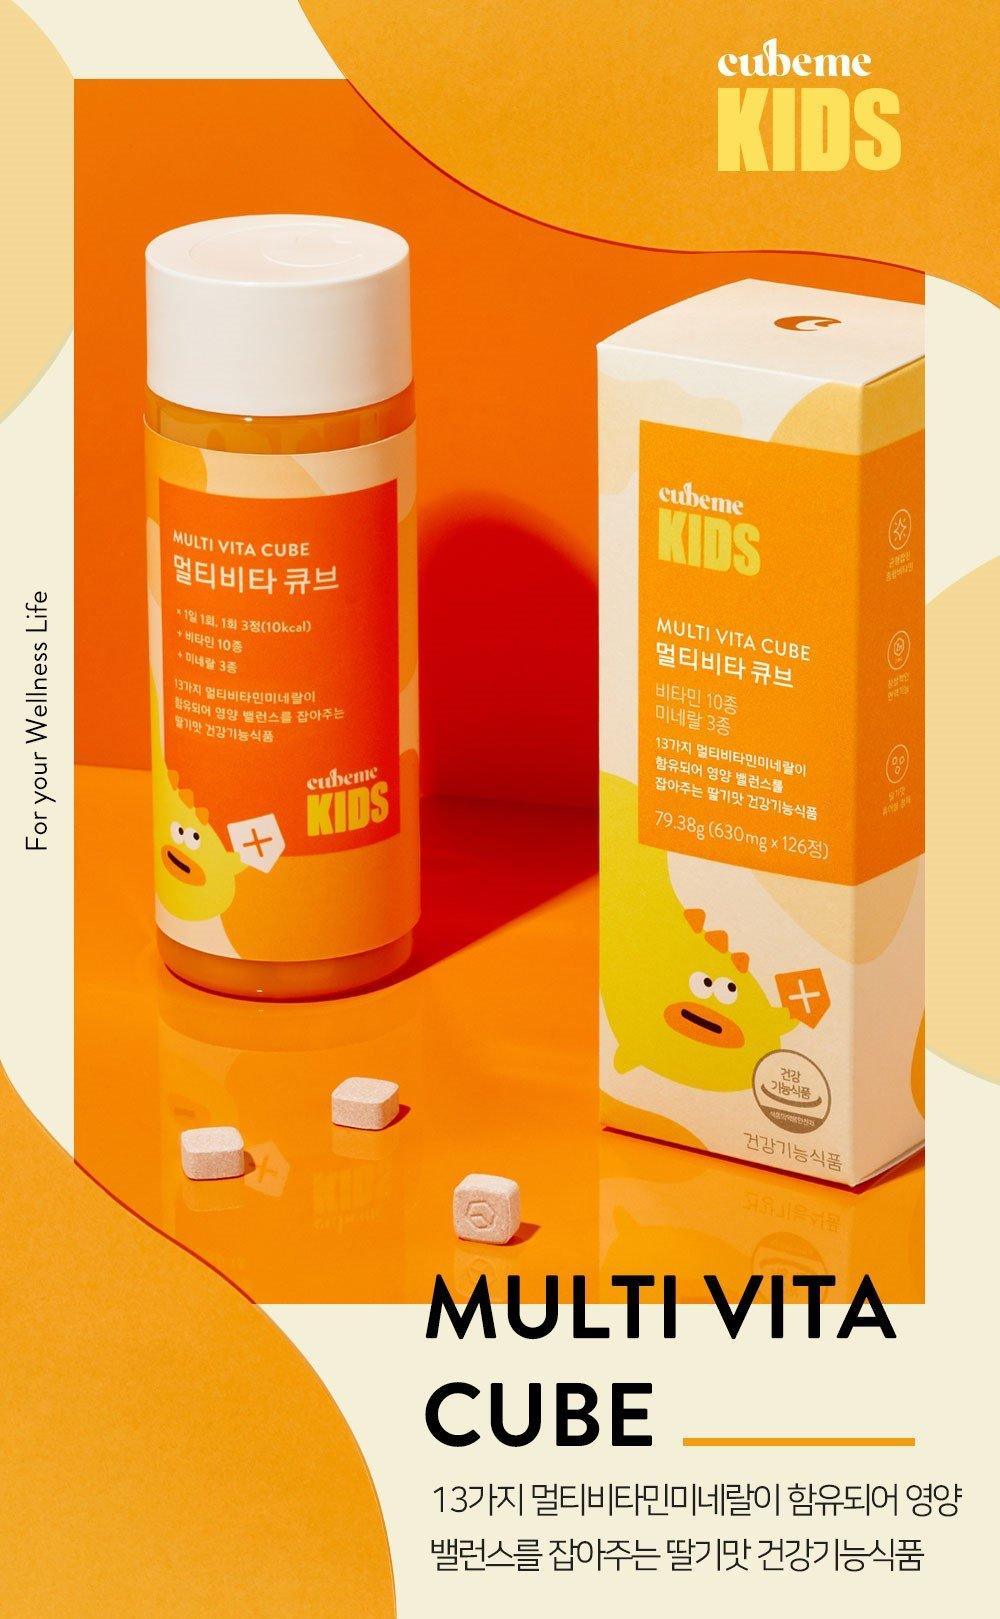 Viên Vitamin Cubeme Kids Multi Vita Cube - Kallos Vietnam